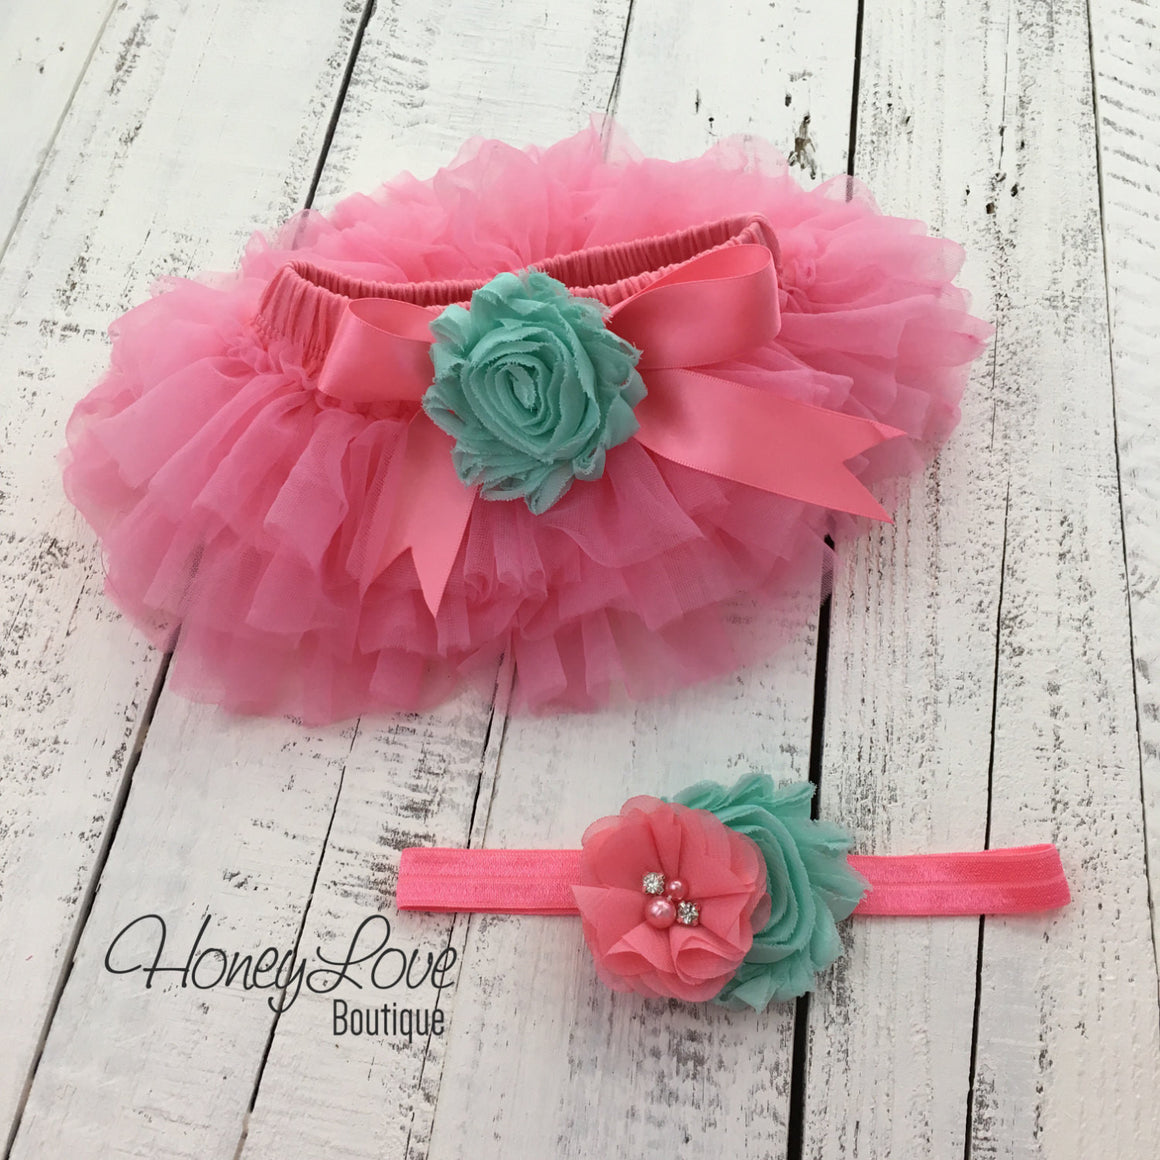 Coral Pink/Mint/Aqua Embellished tutu skirt bloomers and headband - HoneyLoveBoutique